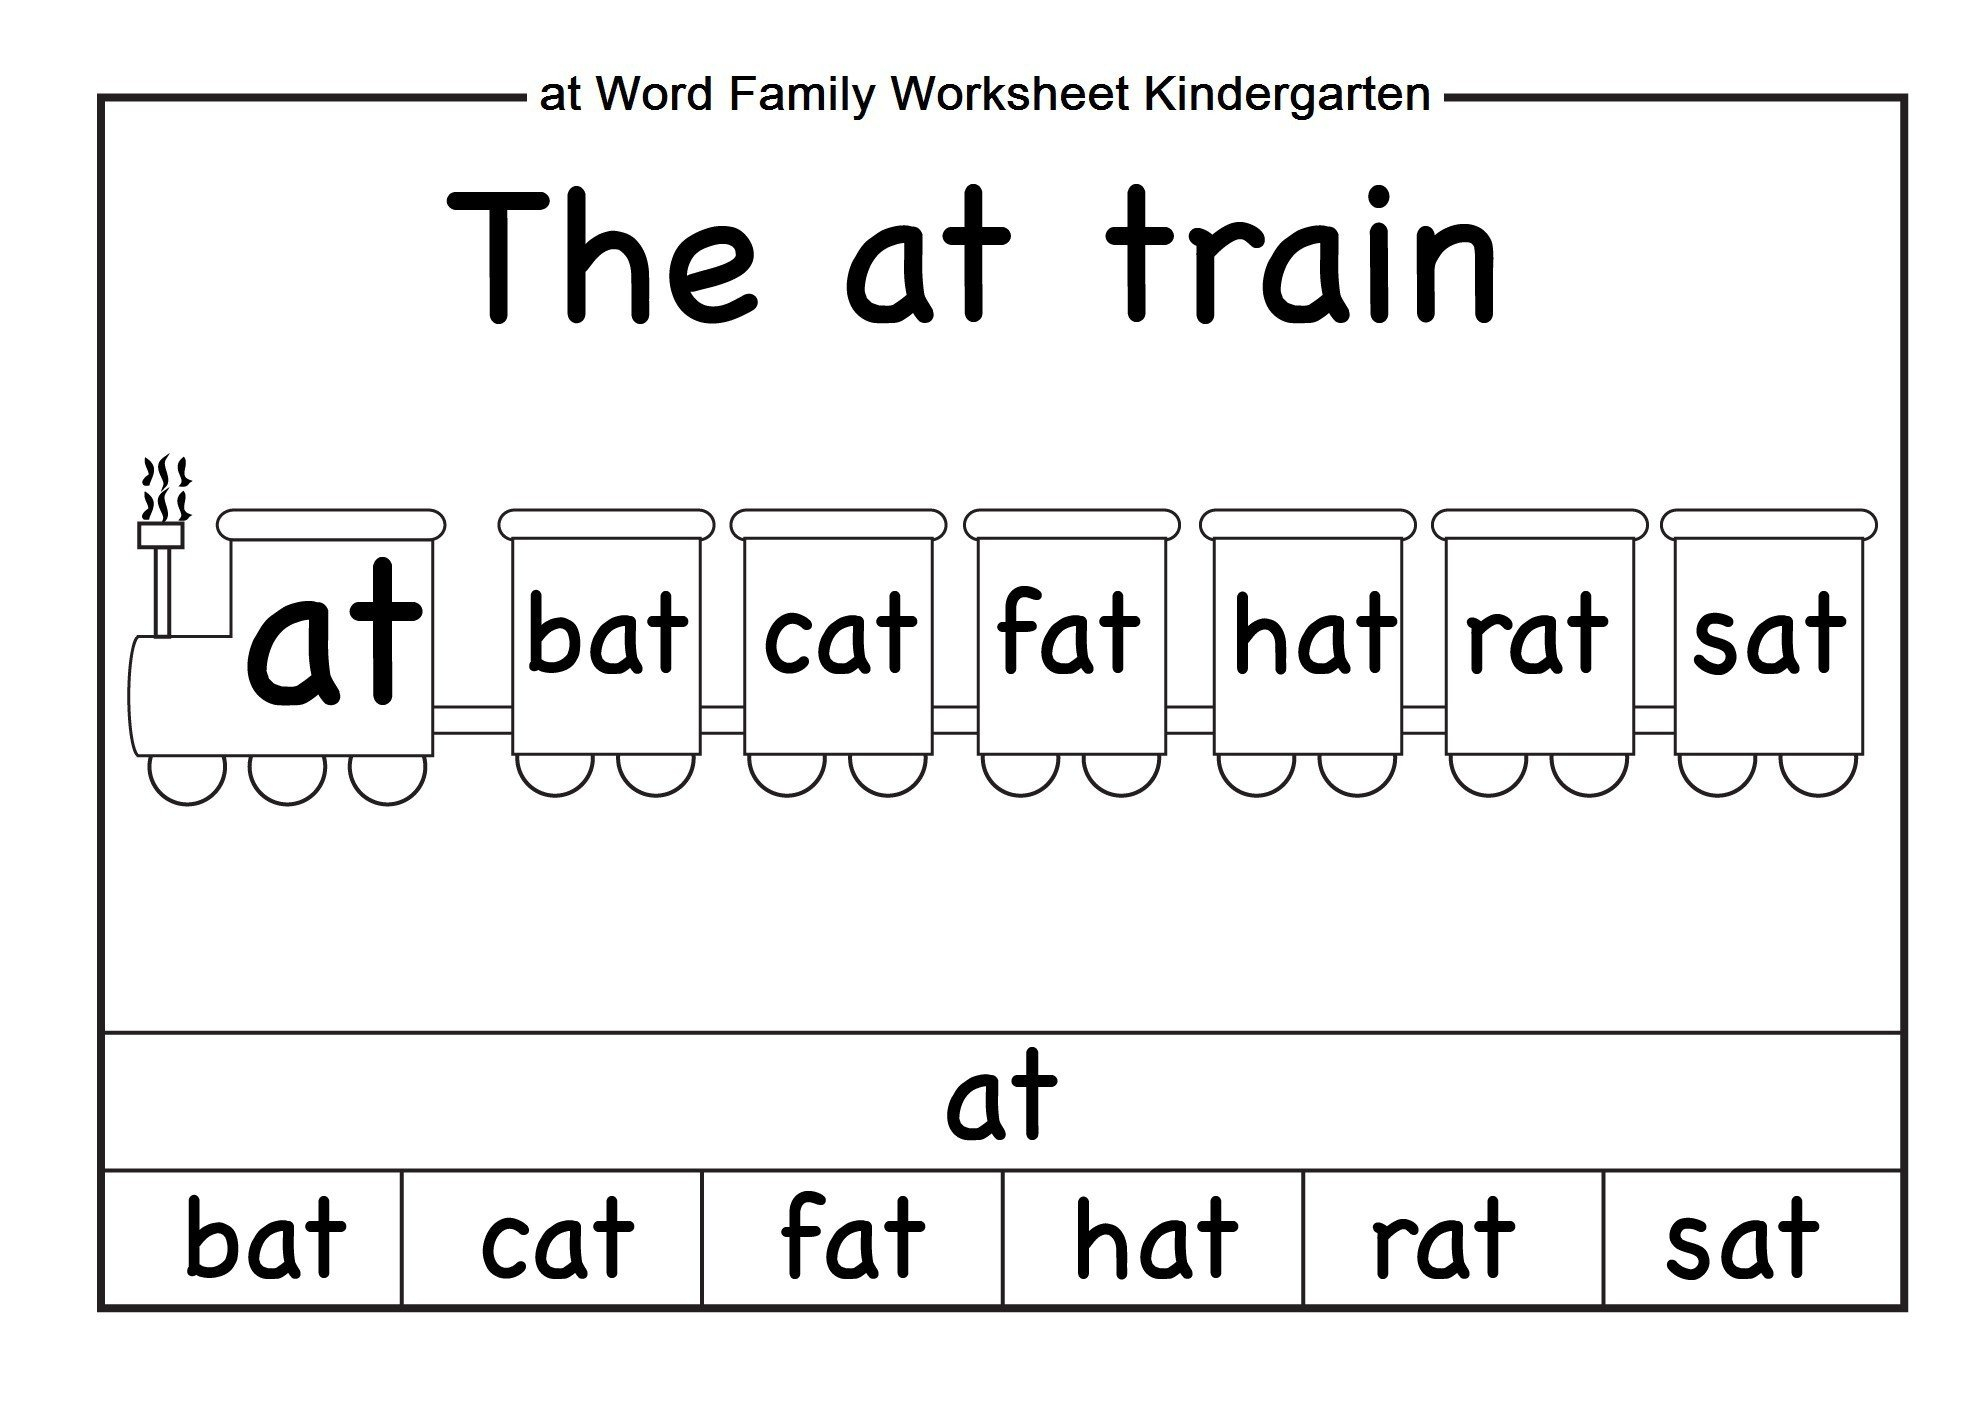 Kindergarten Songs To Teach Kids Education Grants For Schools Within Word Family Worksheets Kindergarten